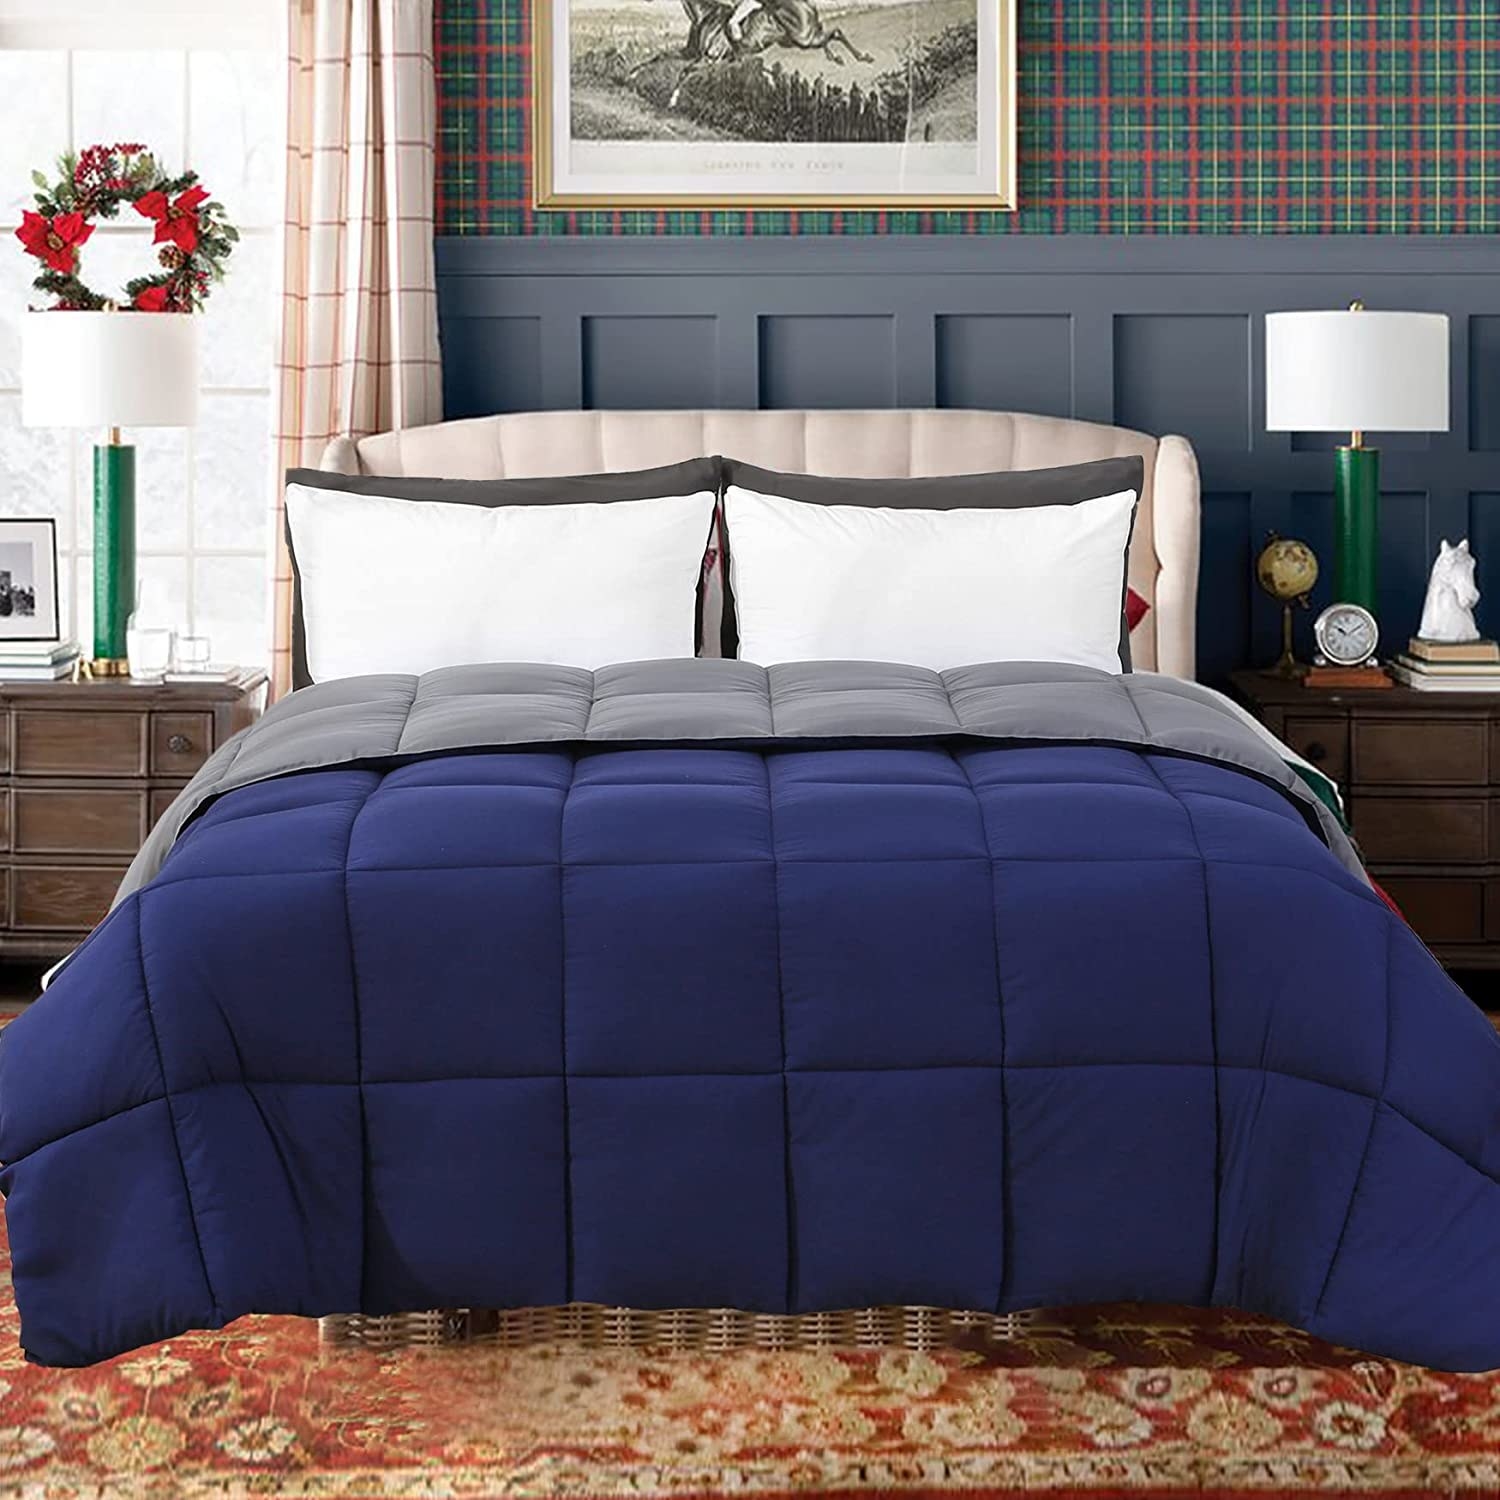 Details about   Comfort Spaces Cozy Comforter Set Modern Classic Design Down Alternative 